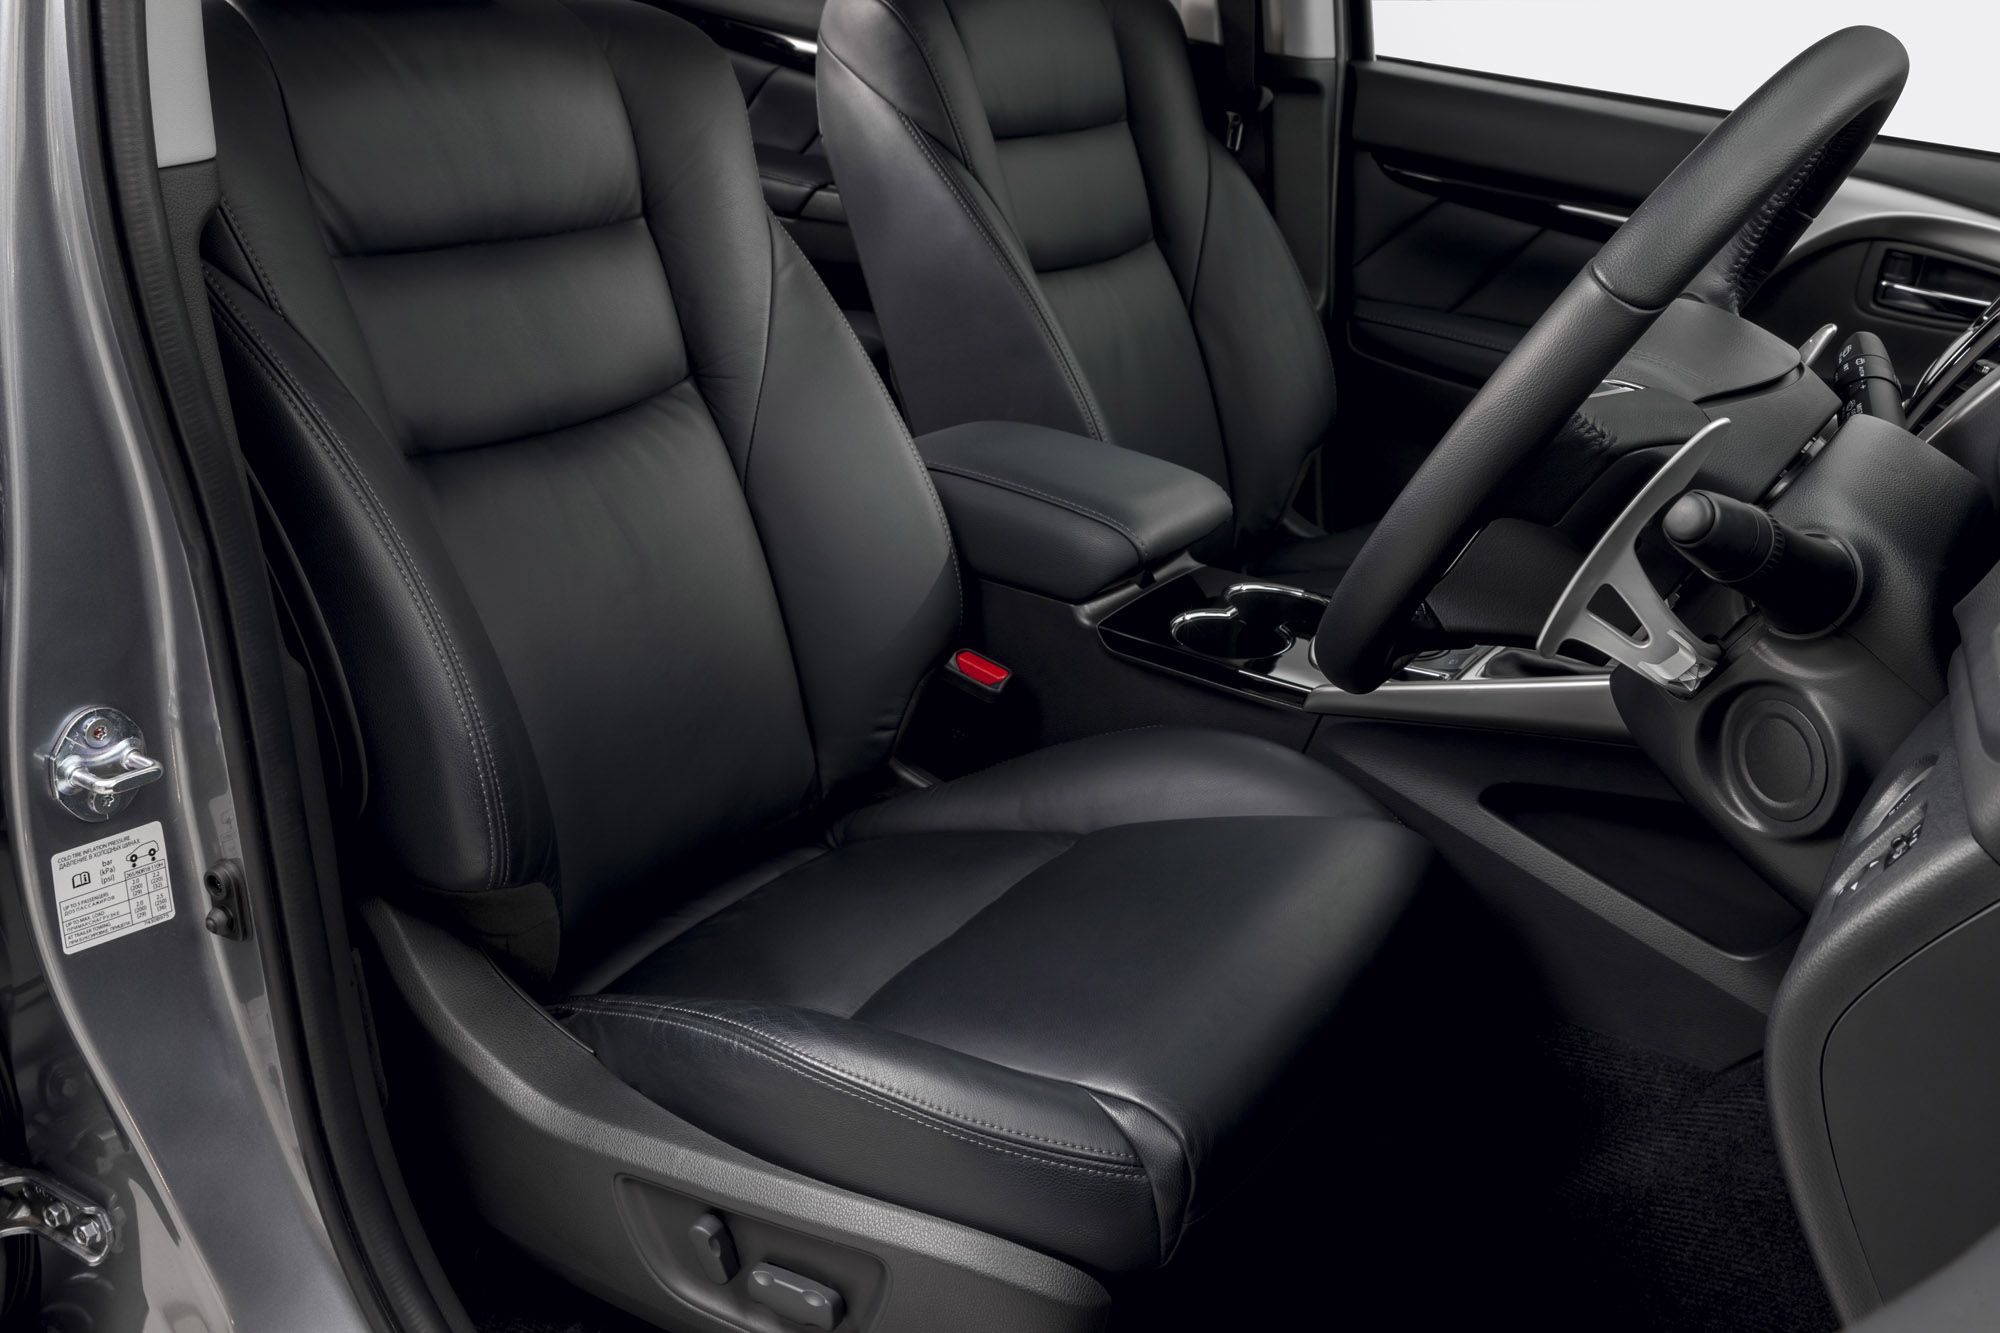 2016 Mitsubishi Pajero Sport Cockpit Seat Interior (View 16 of 23)